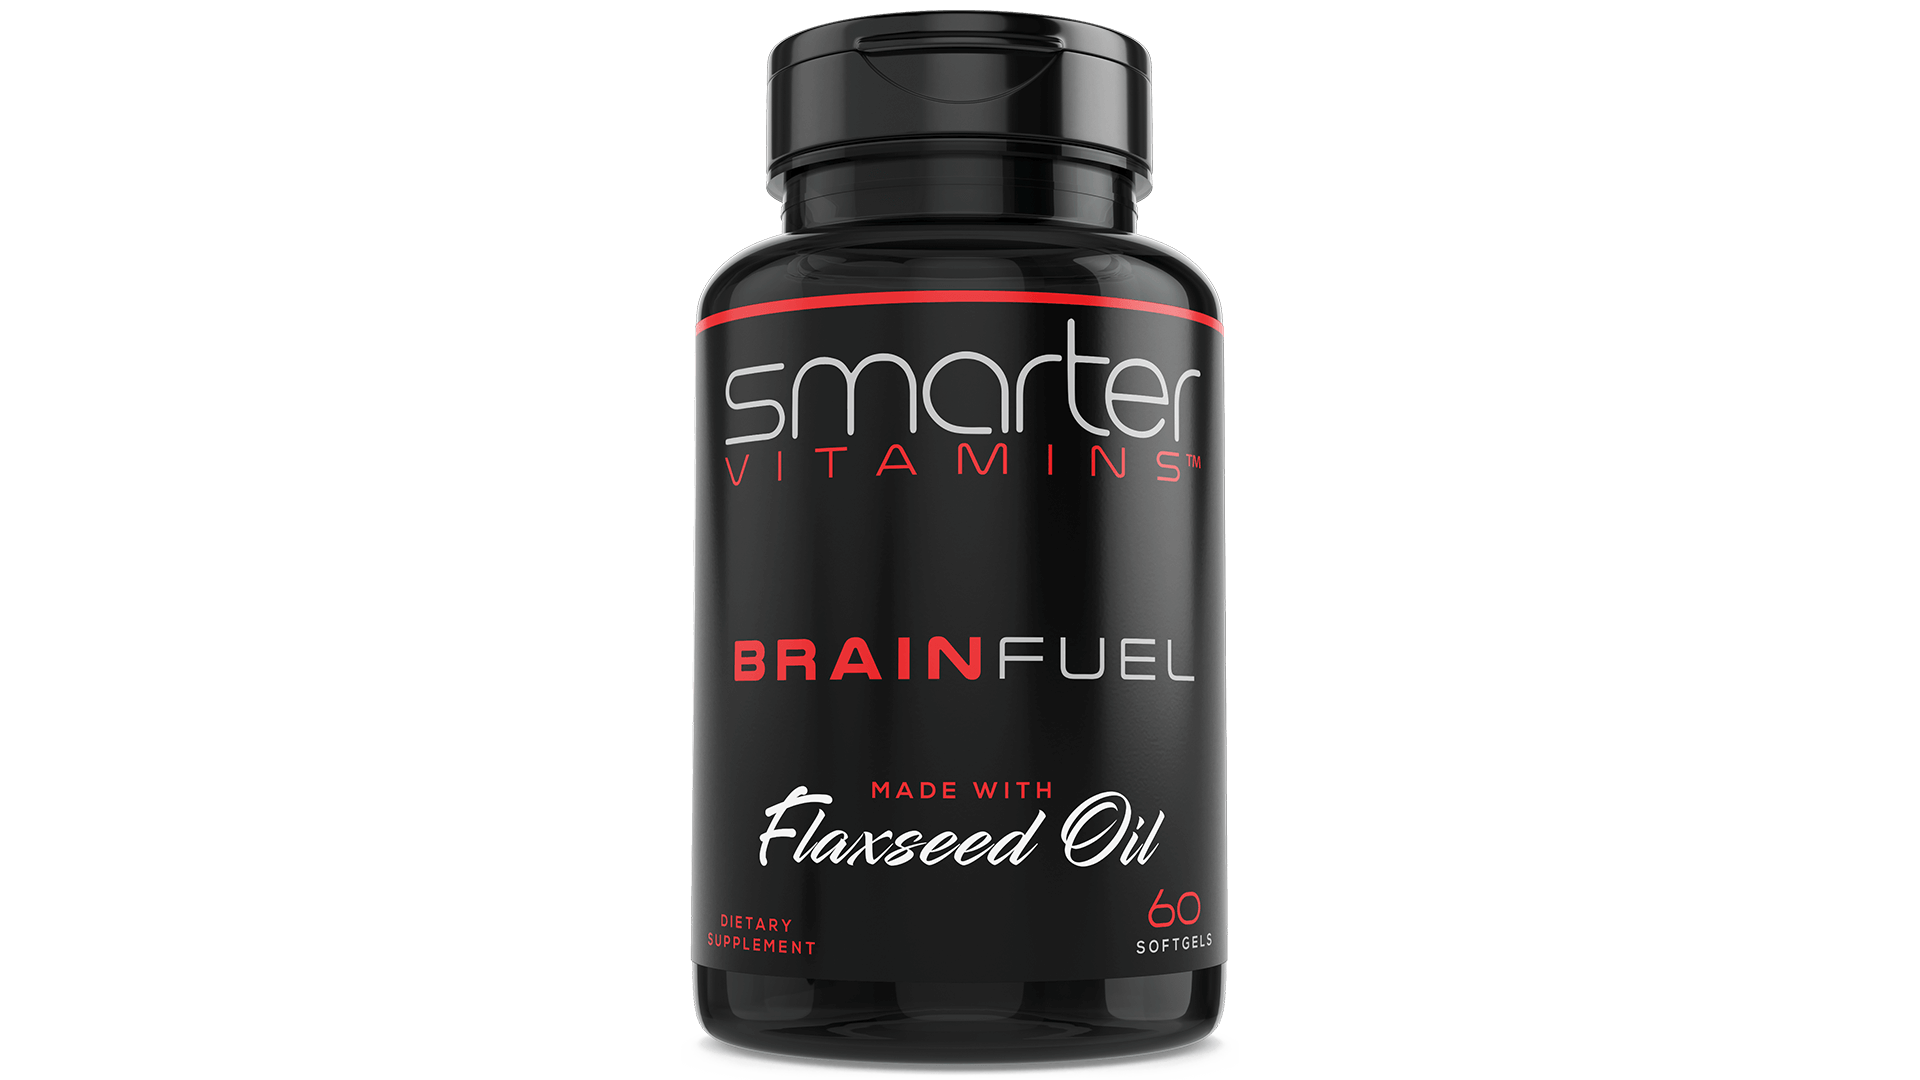 1 bottle of Brain Fuel. 1 month supply.